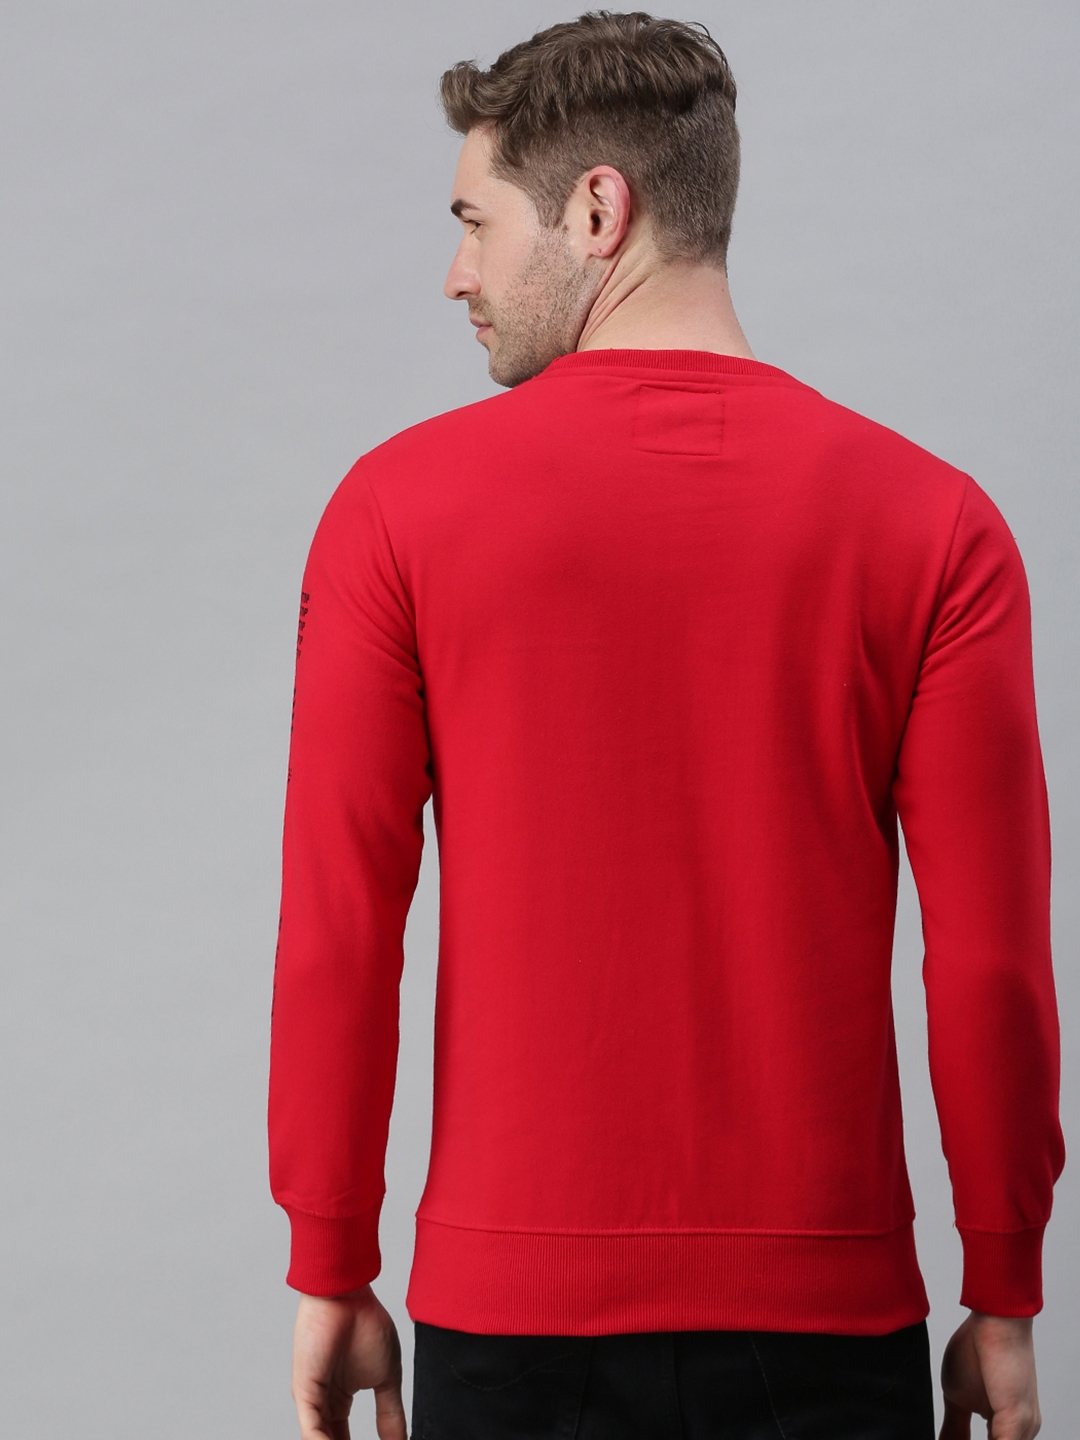 Men's Red Cotton Blend Printed Sweatshirts